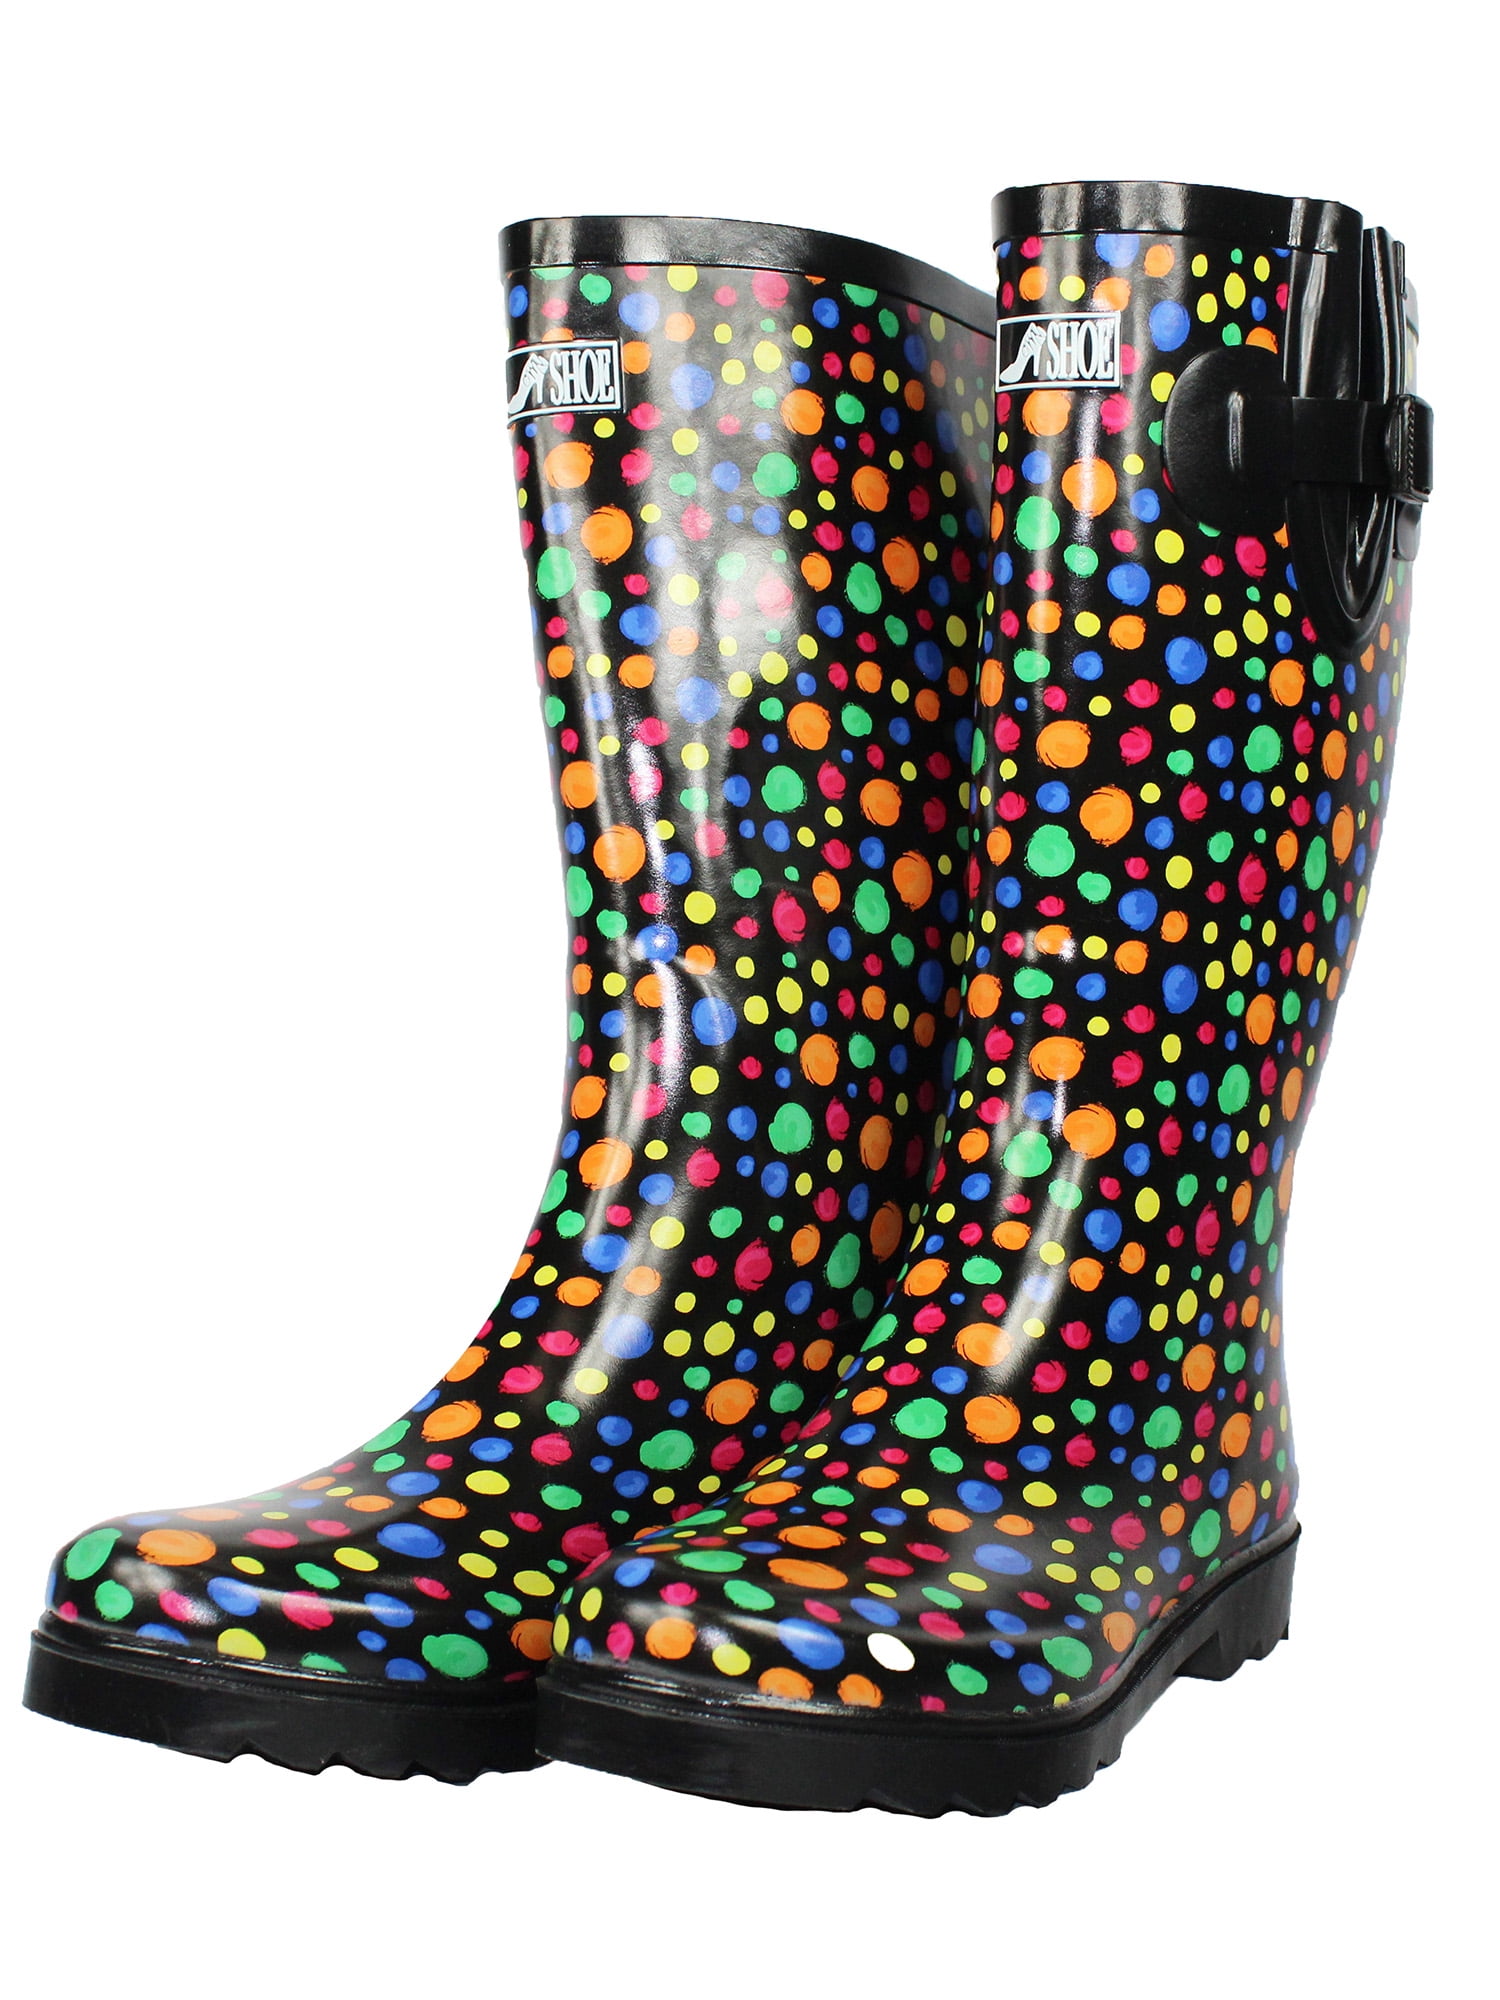 women's rain boots walmart canada